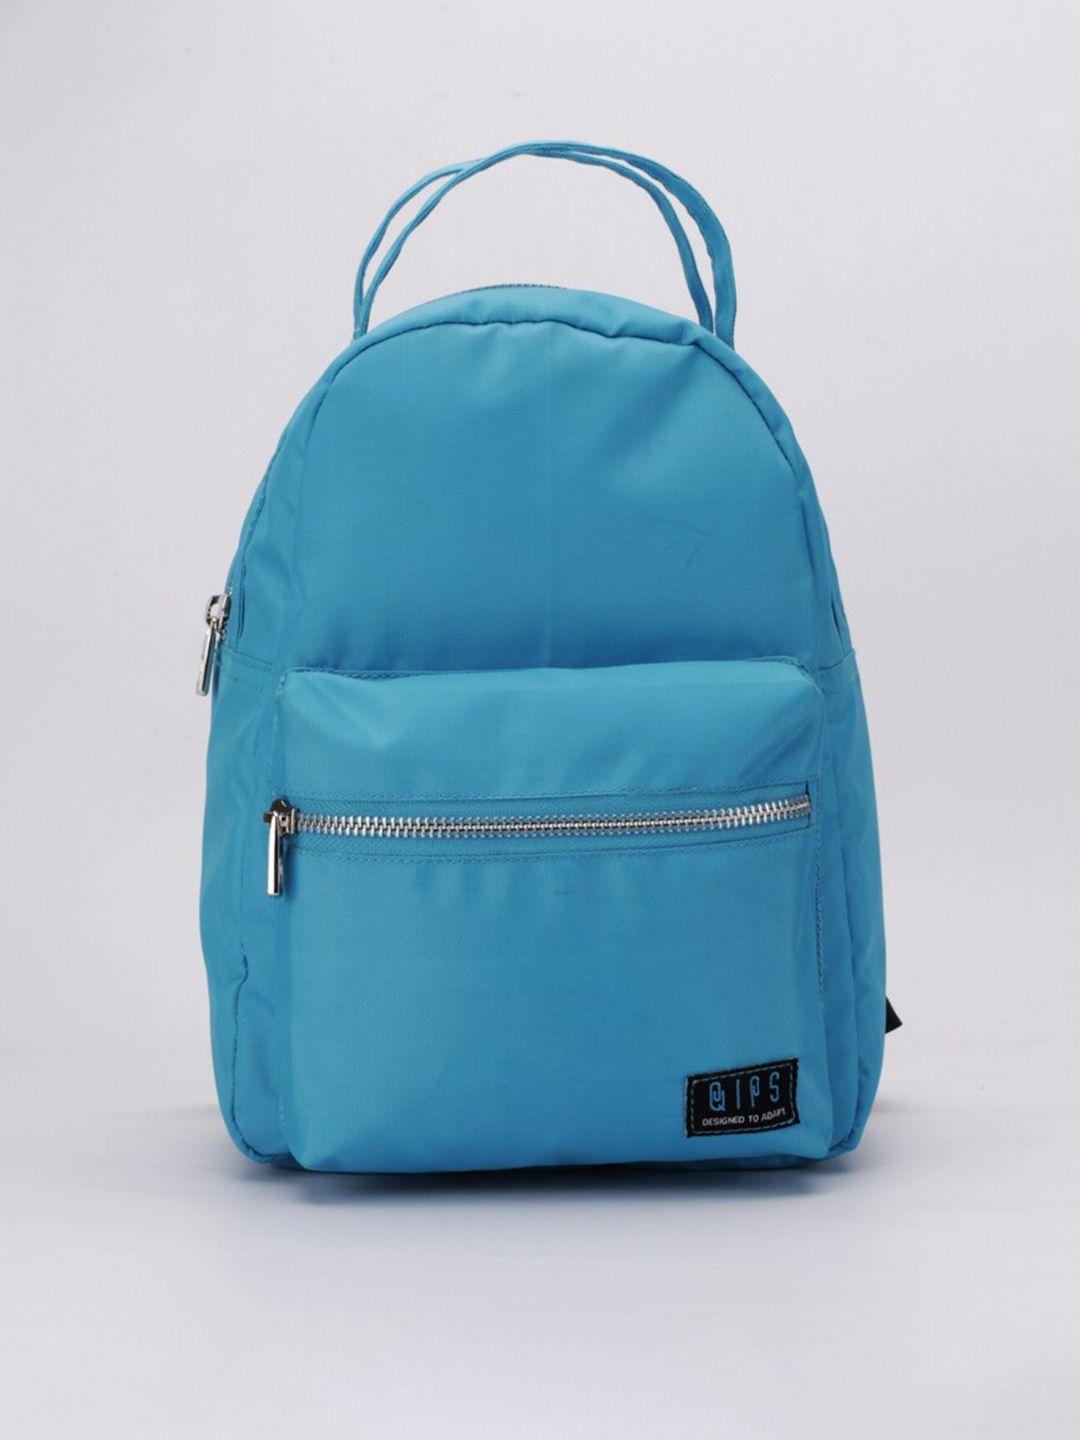 qips women turquoise blue brand logo backpack